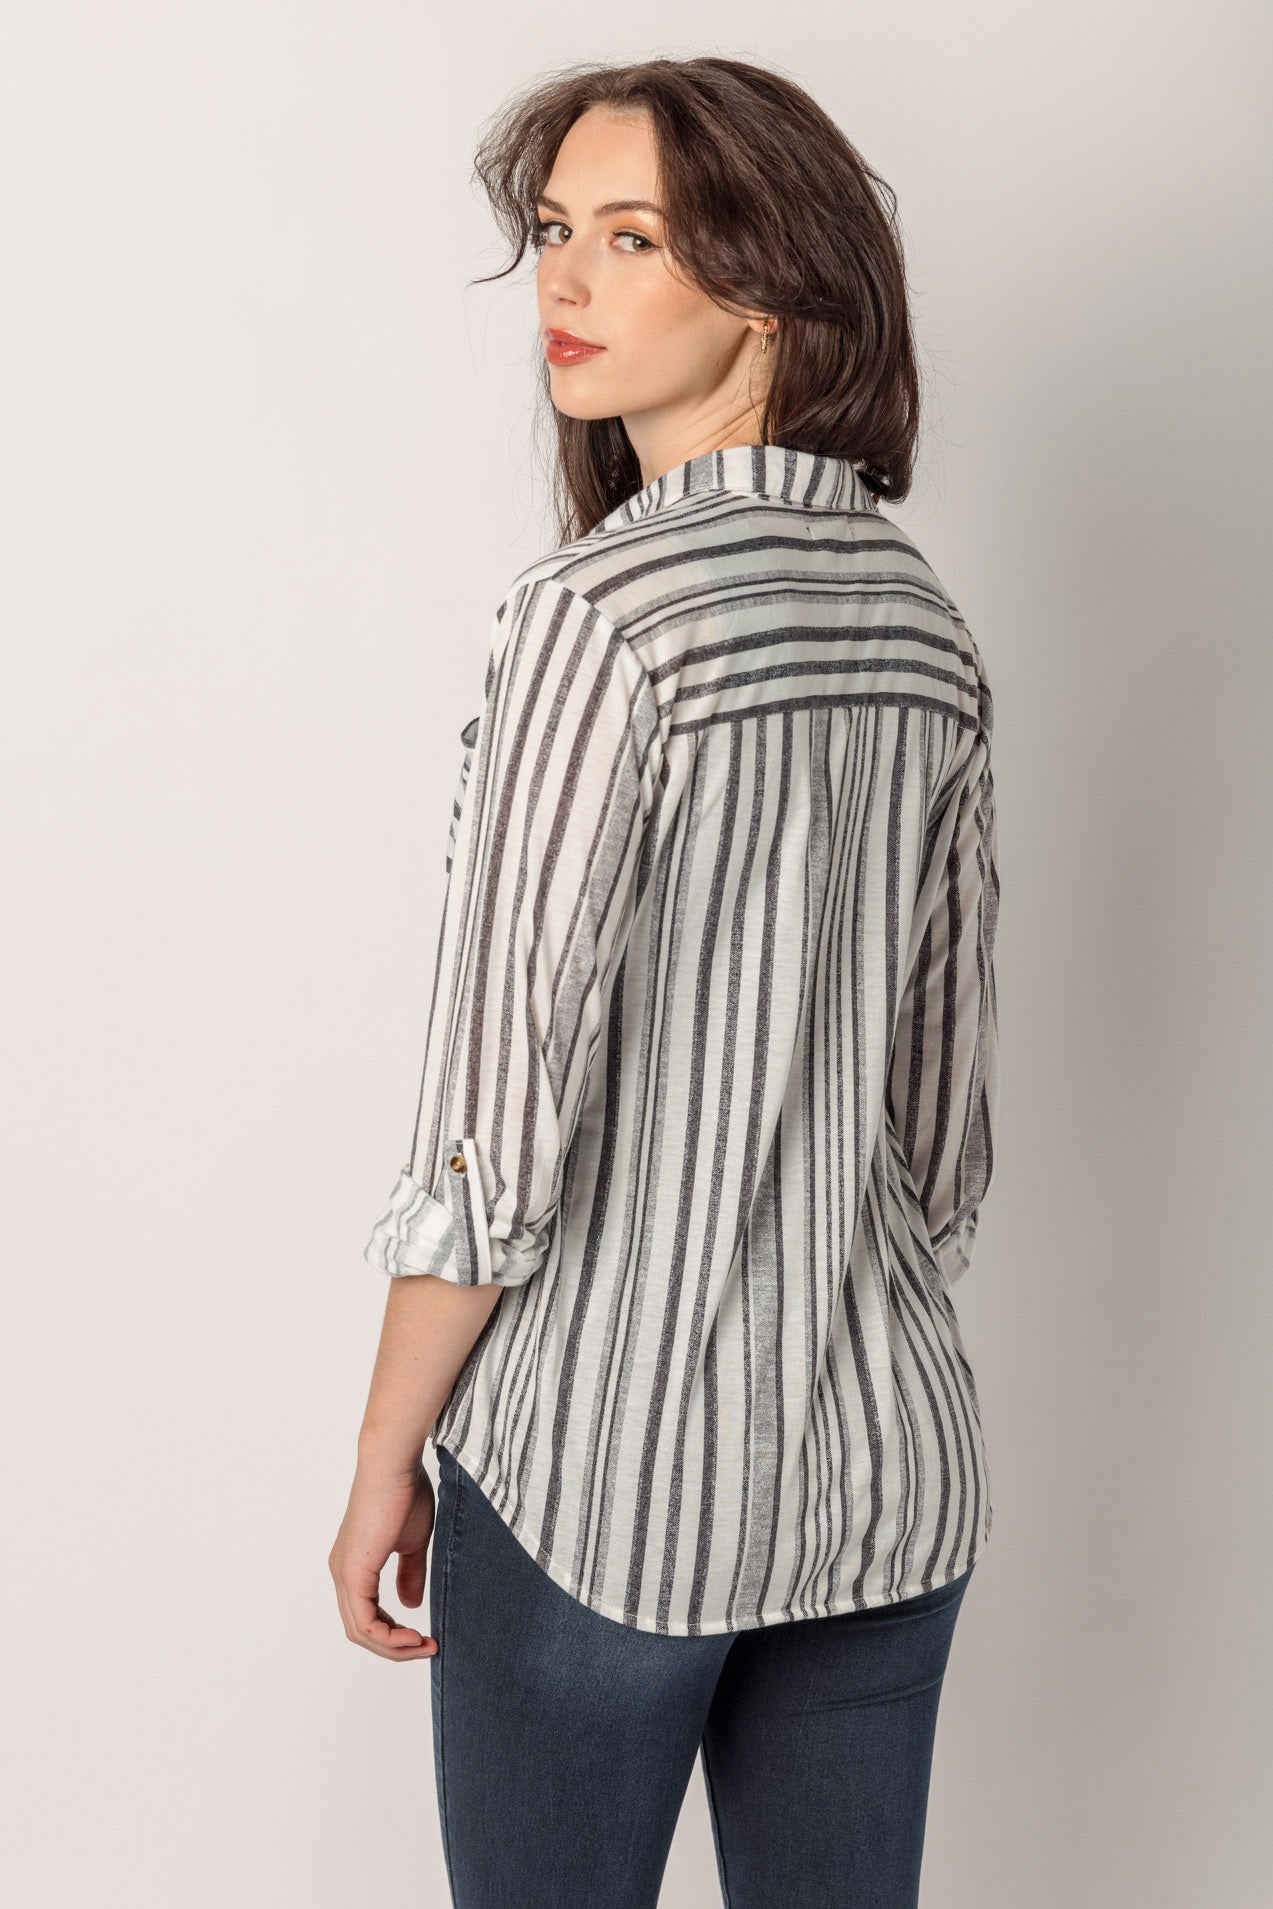 Charcoal Stripe Button-Up Shirt